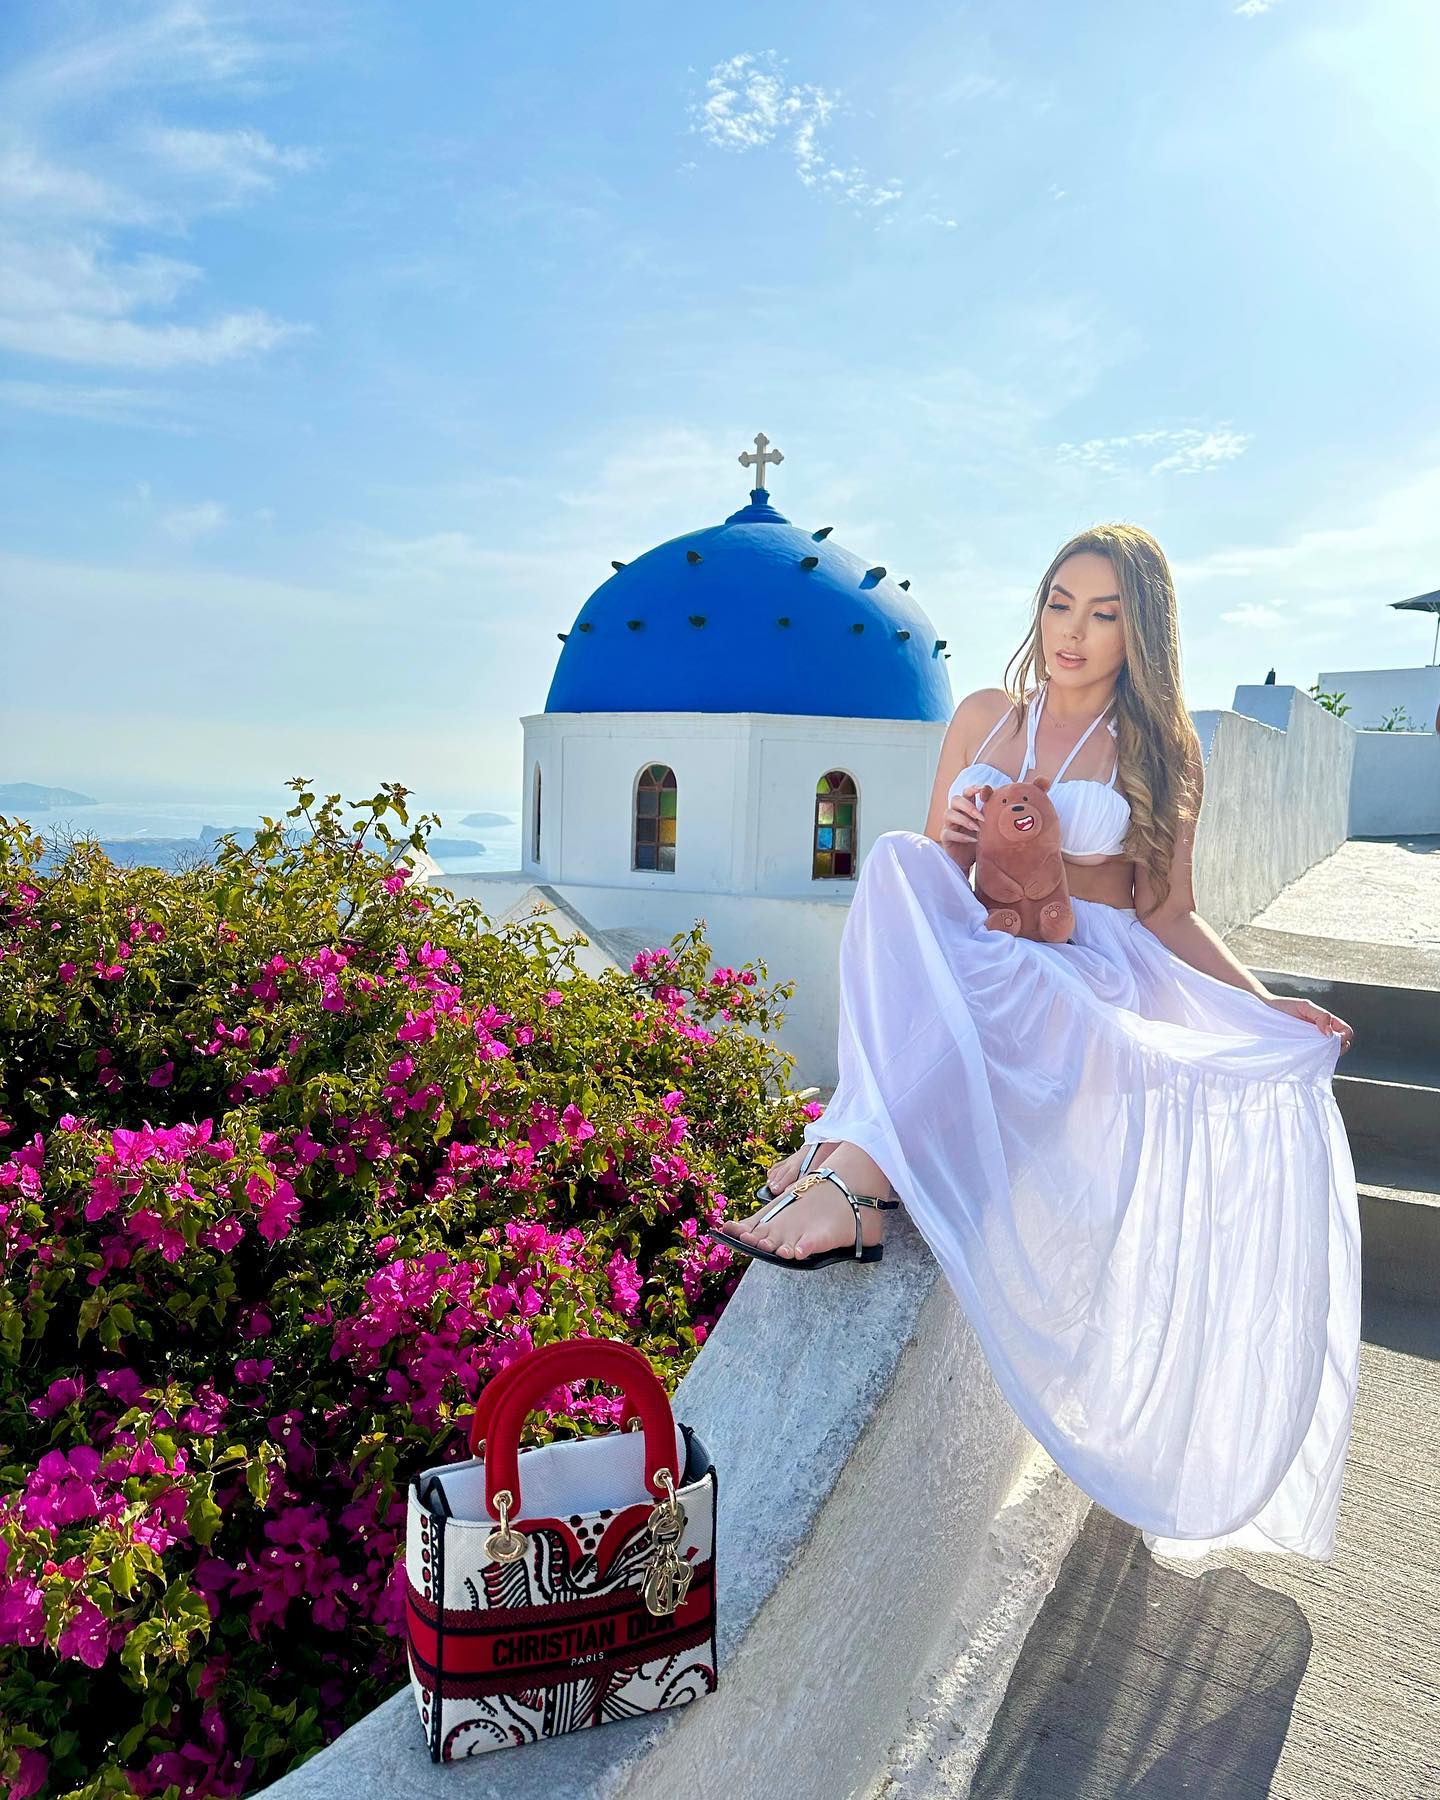 Missing the days in Santorini 🥰 #Greece #Santorini #aegean #imerovigli #travel #vacations #lifestyle